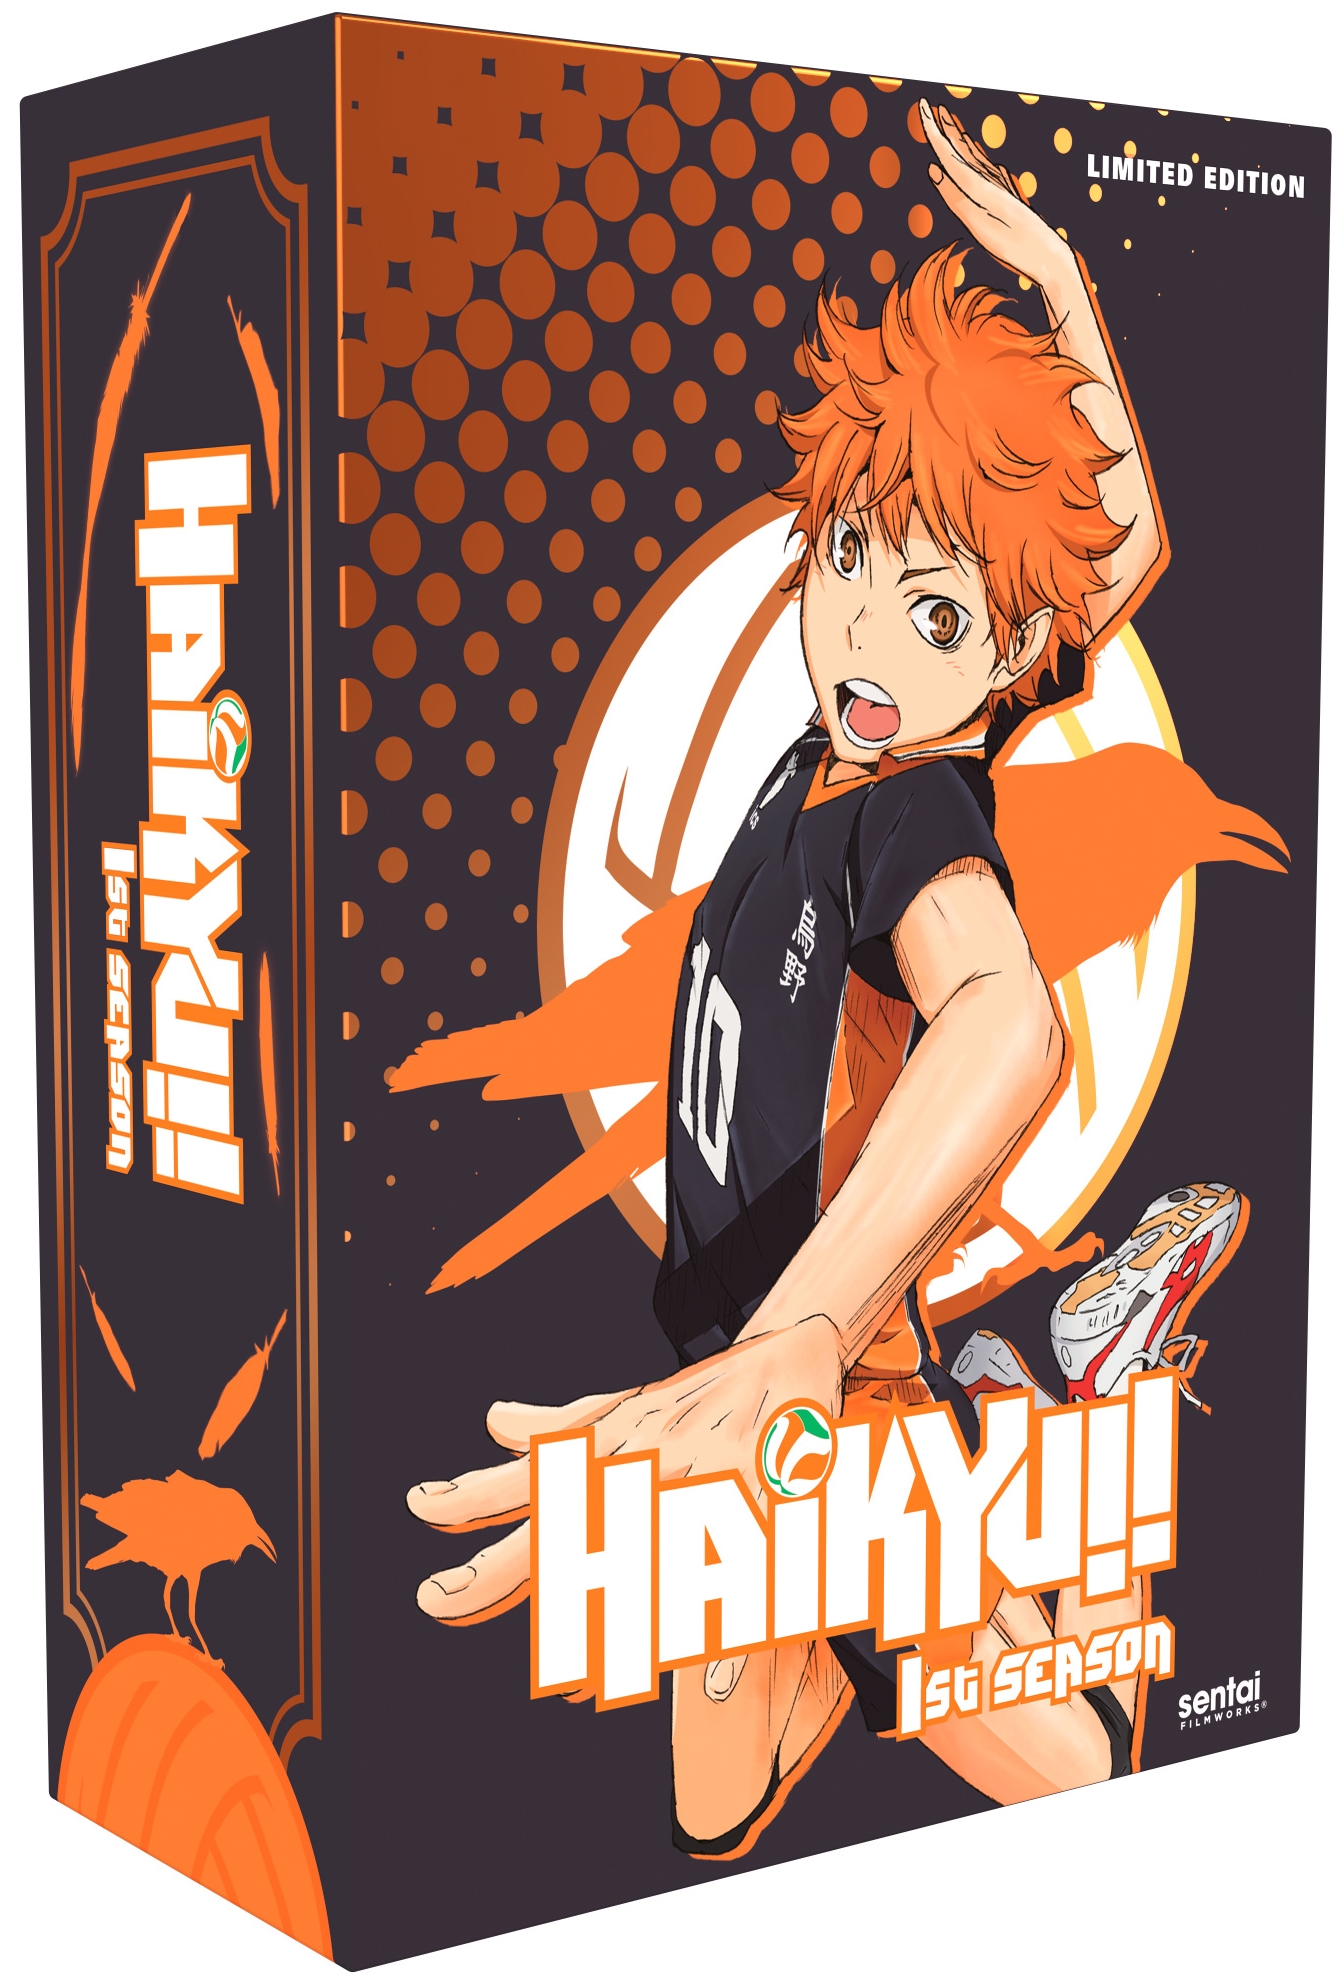 Haikyu Haikyuu Complete Season 2 Limited Premium Blu-ray DVD Box Set Anime  816726020716